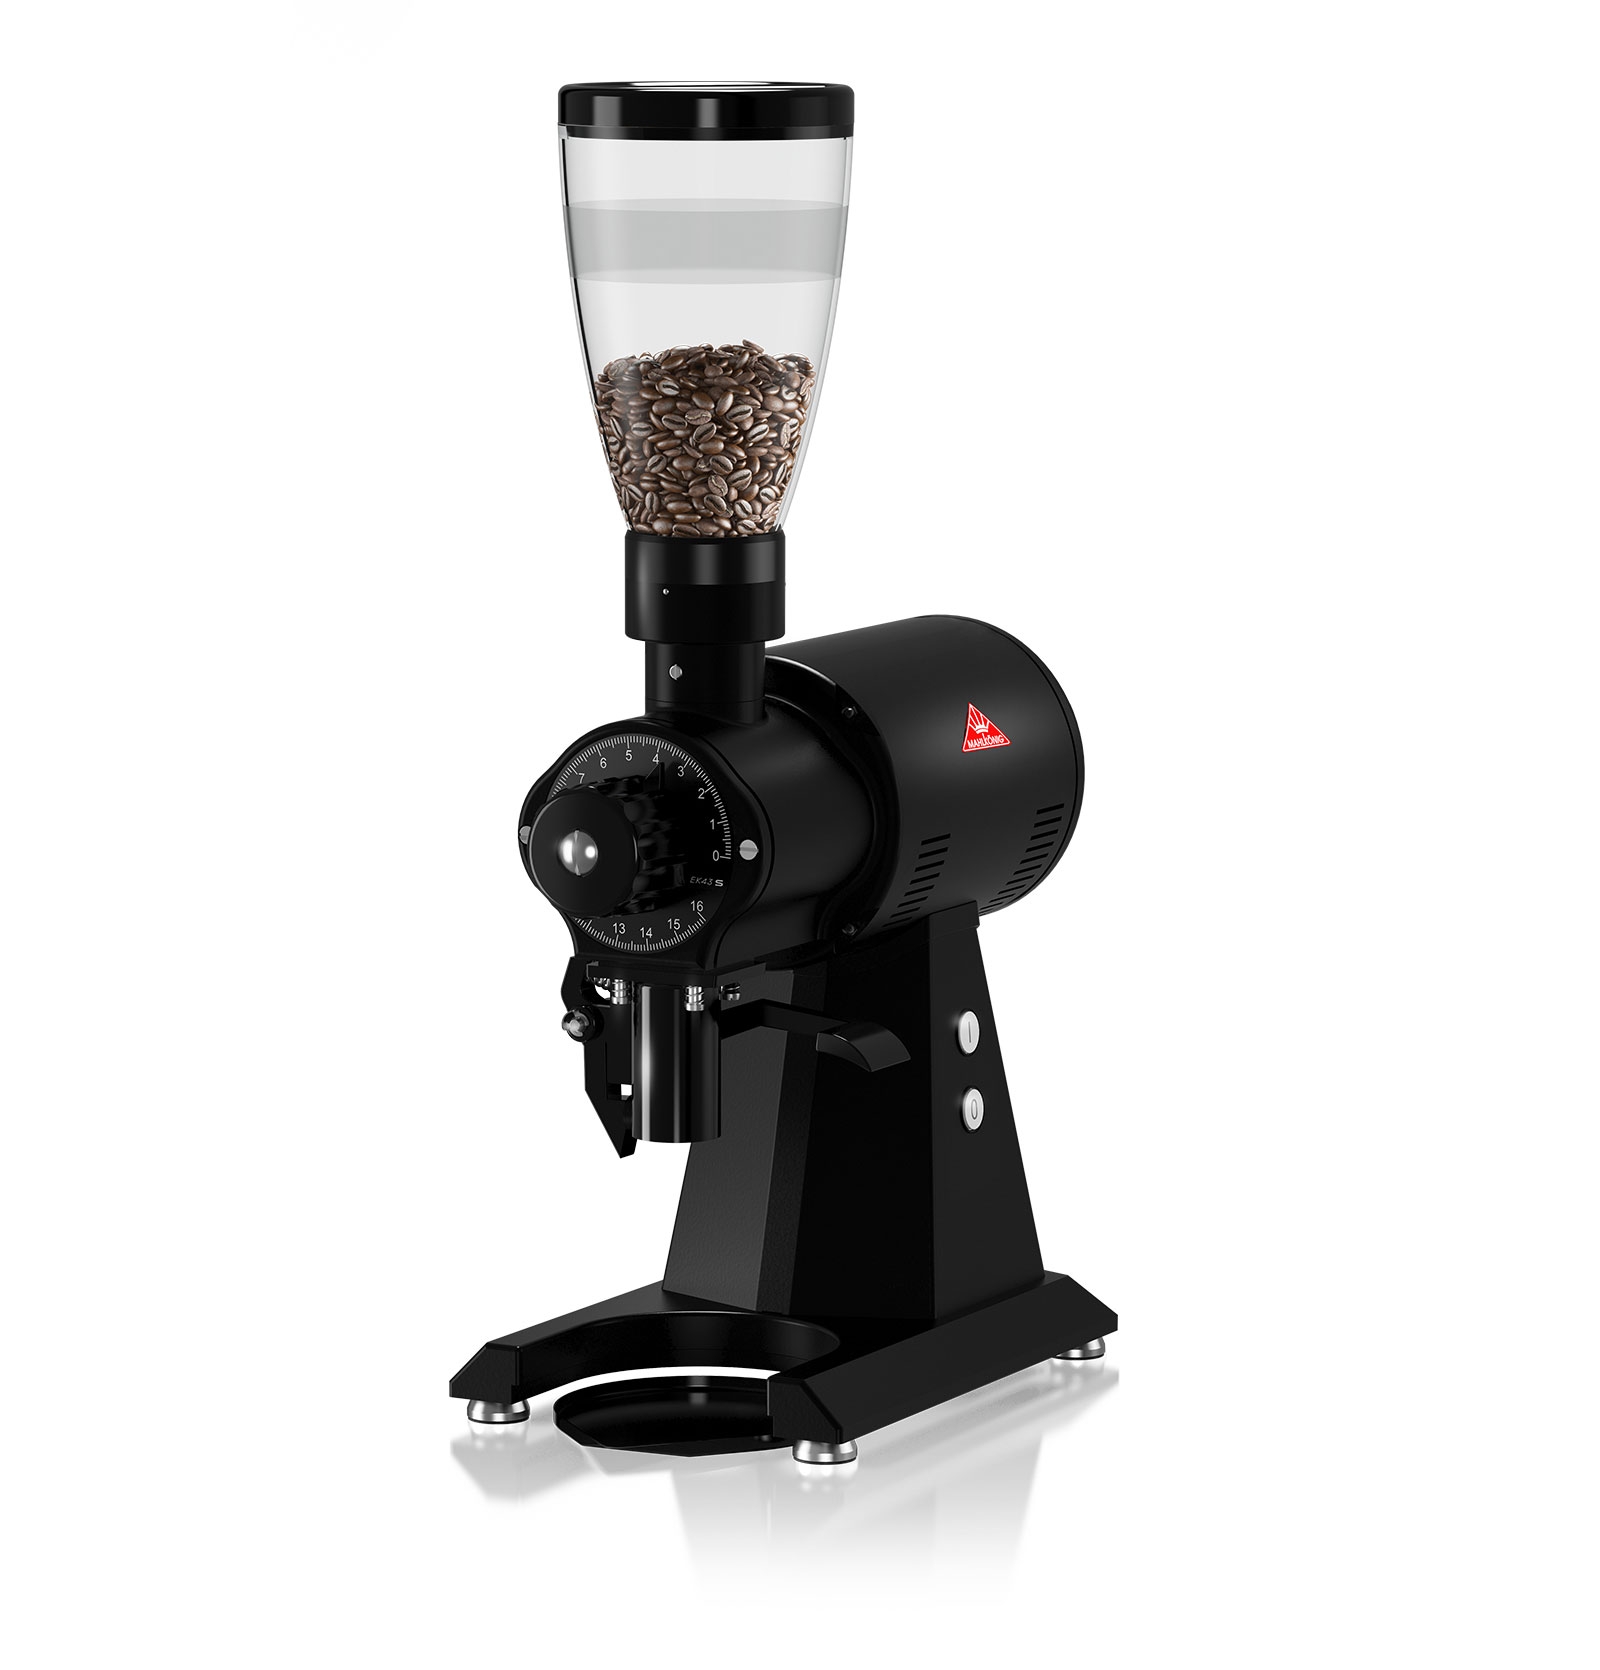 Mahlkönig EK 43 S Espresso &amp; Coffee Grinder negro mate